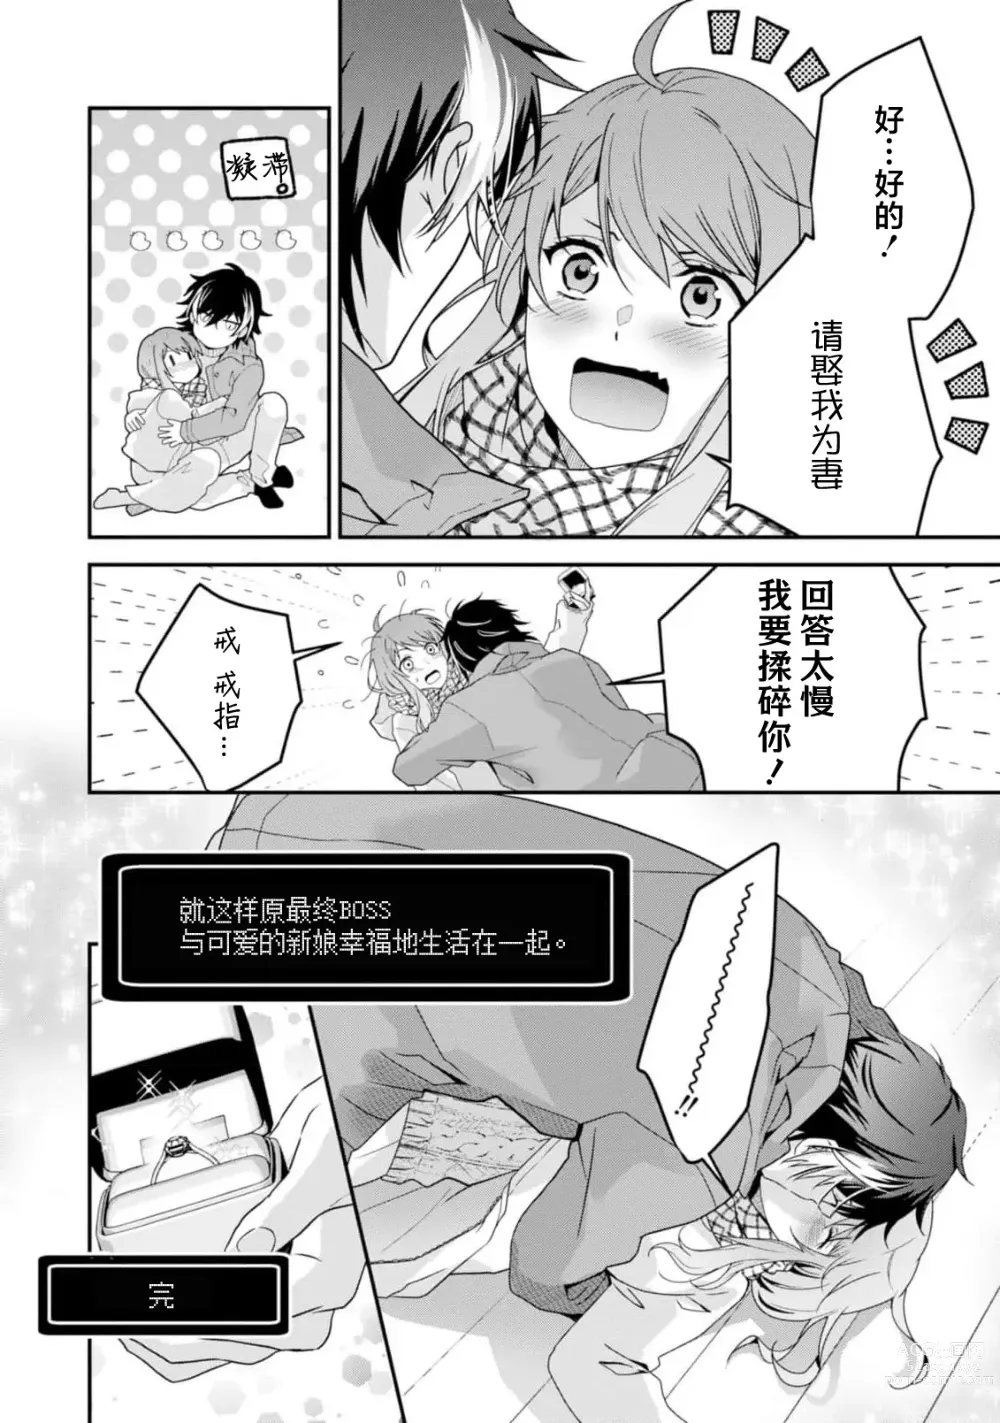 Page 270 of manga 最终BOSS转生而来，因此拿下了他的童贞 1-9 end